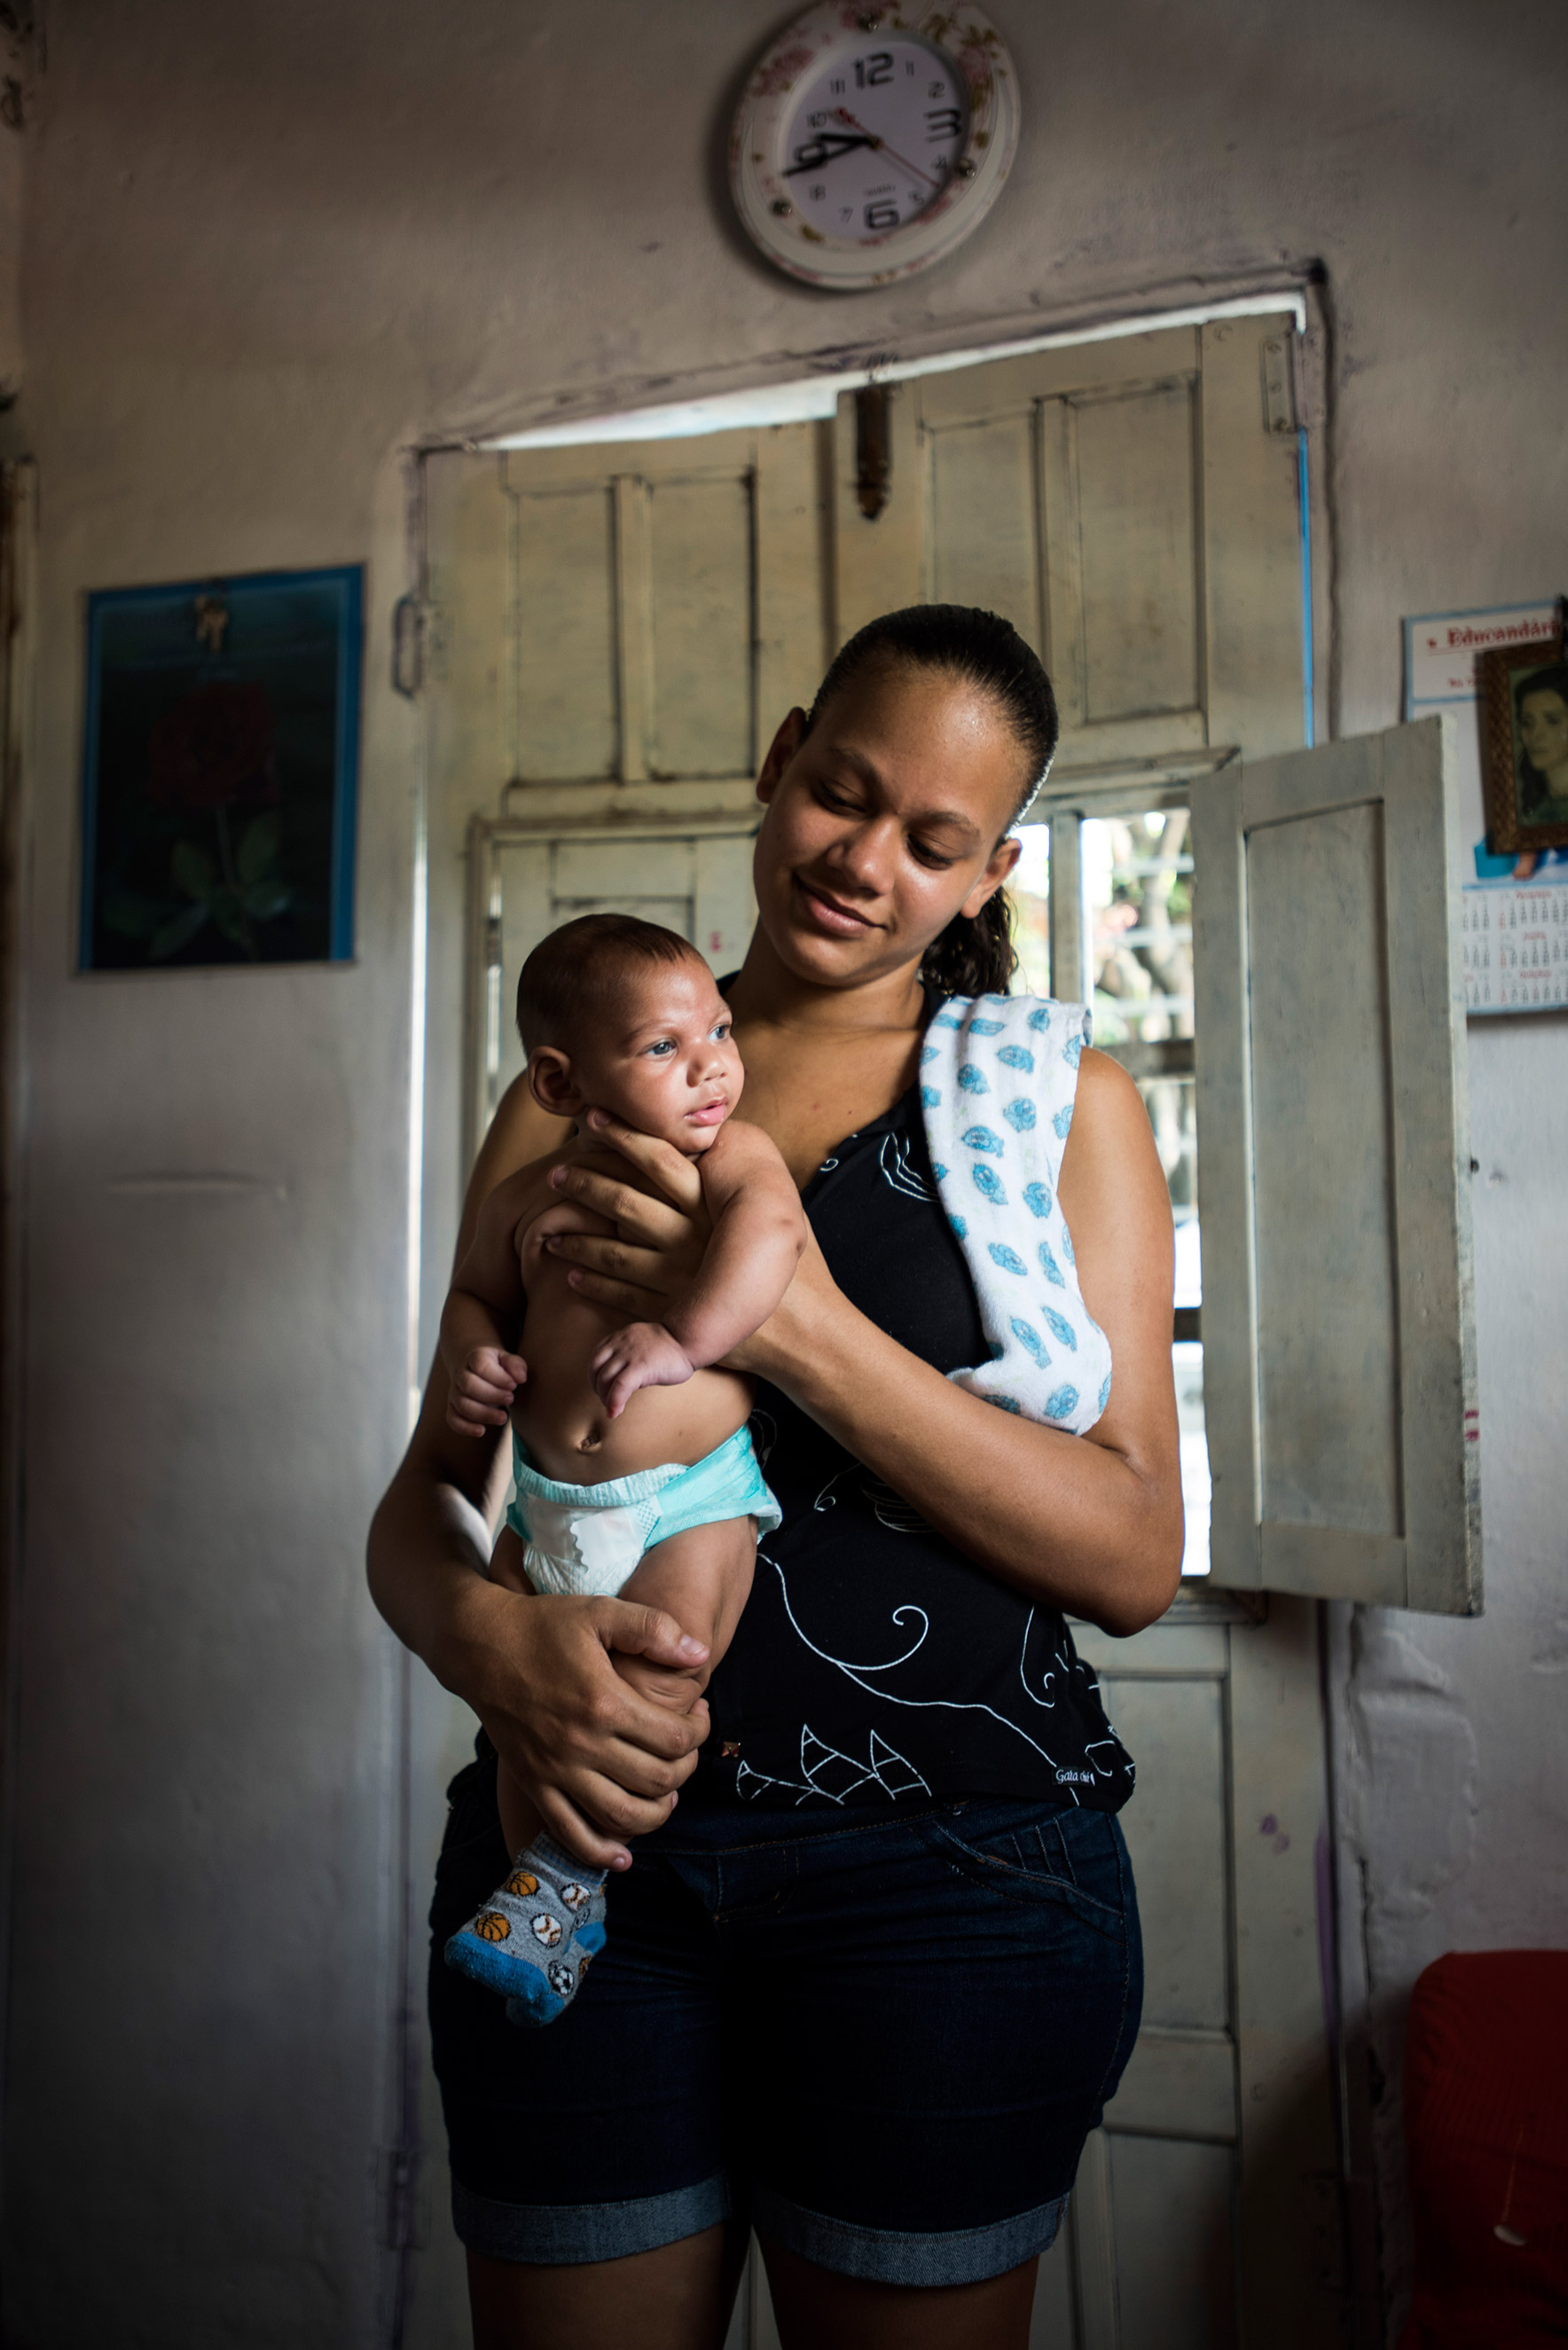 Juliana Diniz da Slva, 22, with her three-month-old son, Pedro Henrique da Silva, in her house in Nova Descoberta, a favela in the outskirts of Recife, Brazil, Feb. 2, 2016. When she was seven months pregnant, doctors discovered the baby had the rare birth defect.